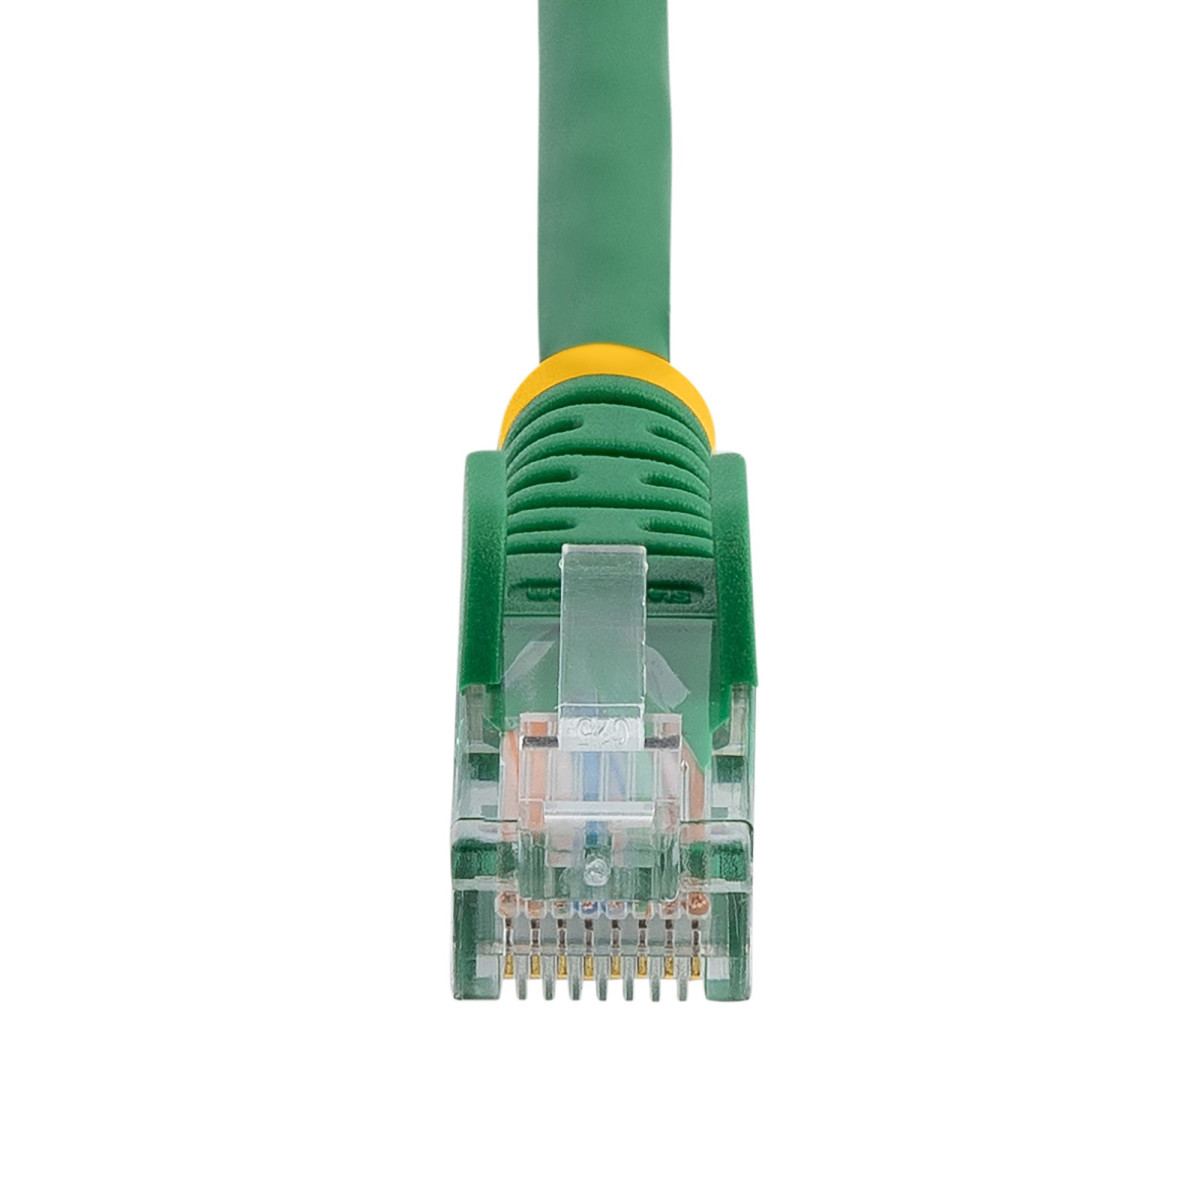 Cat5e patch cable with RJ45 connectors